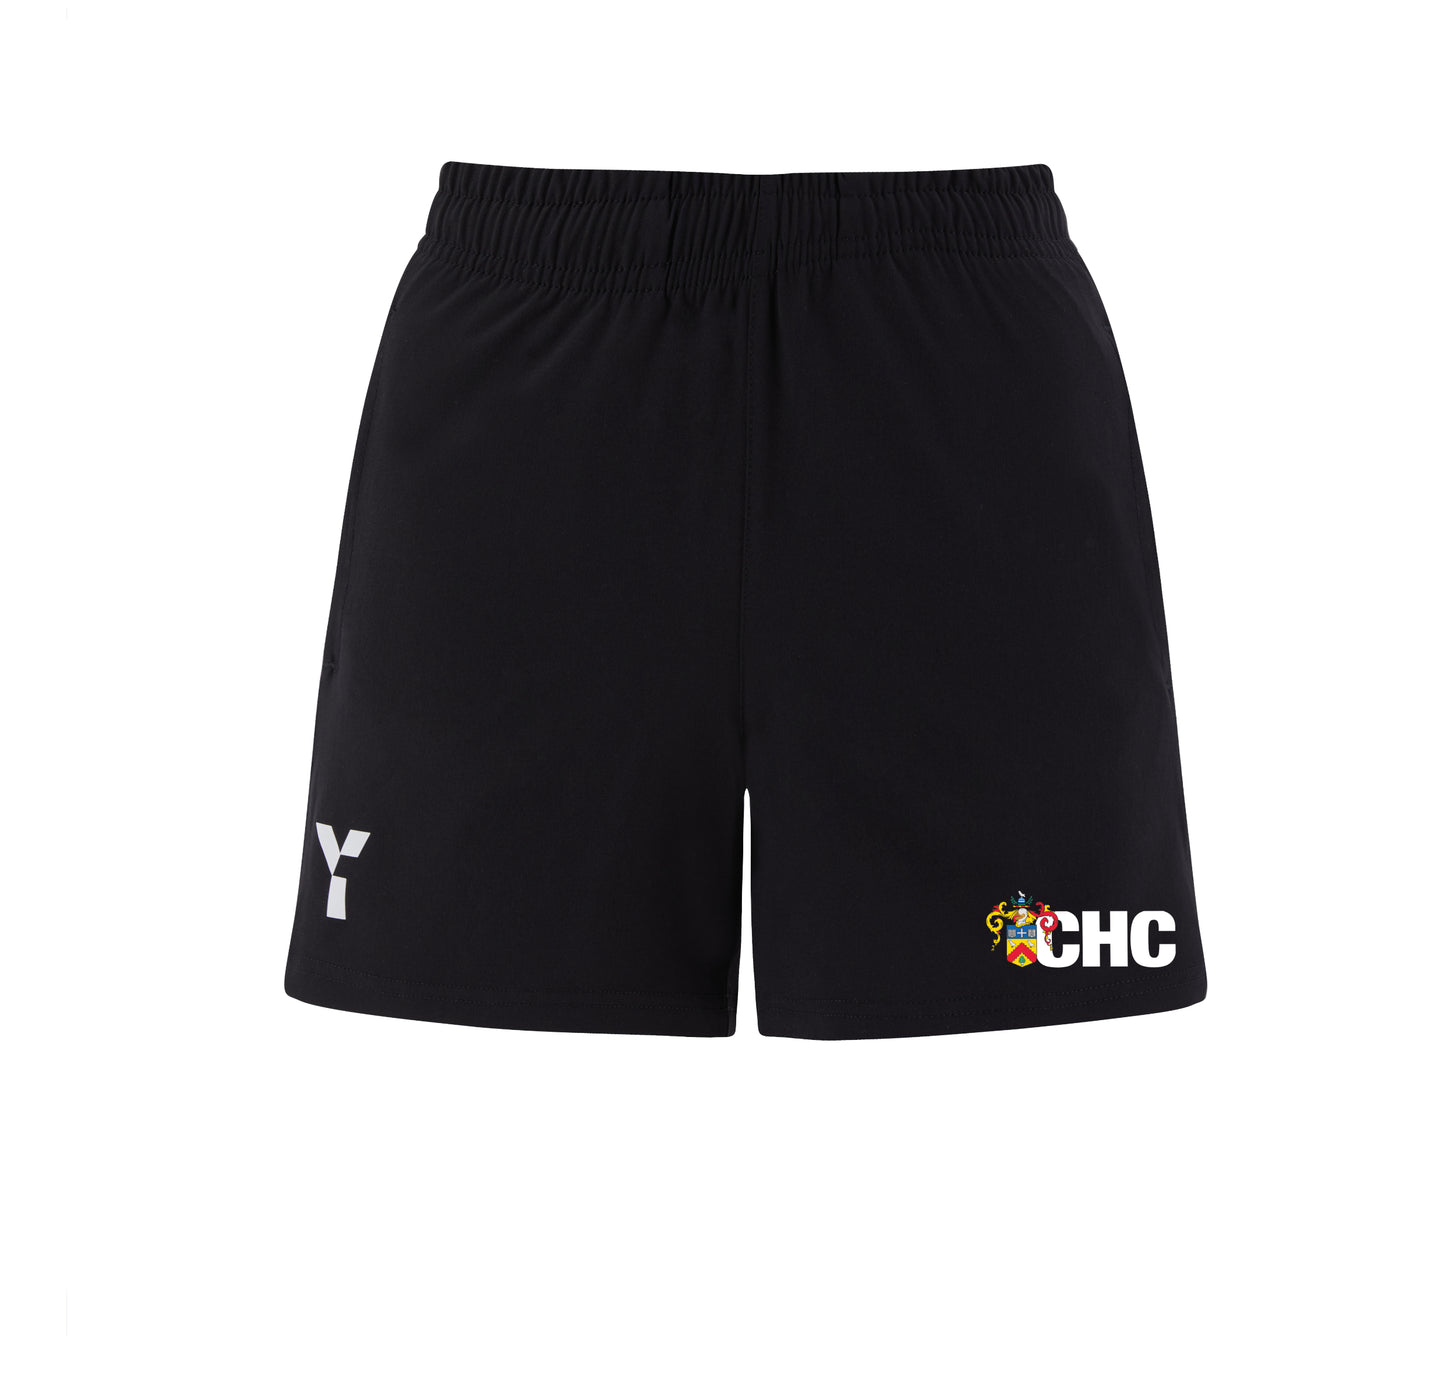 Cheltenham HC - Shorts Mens Black